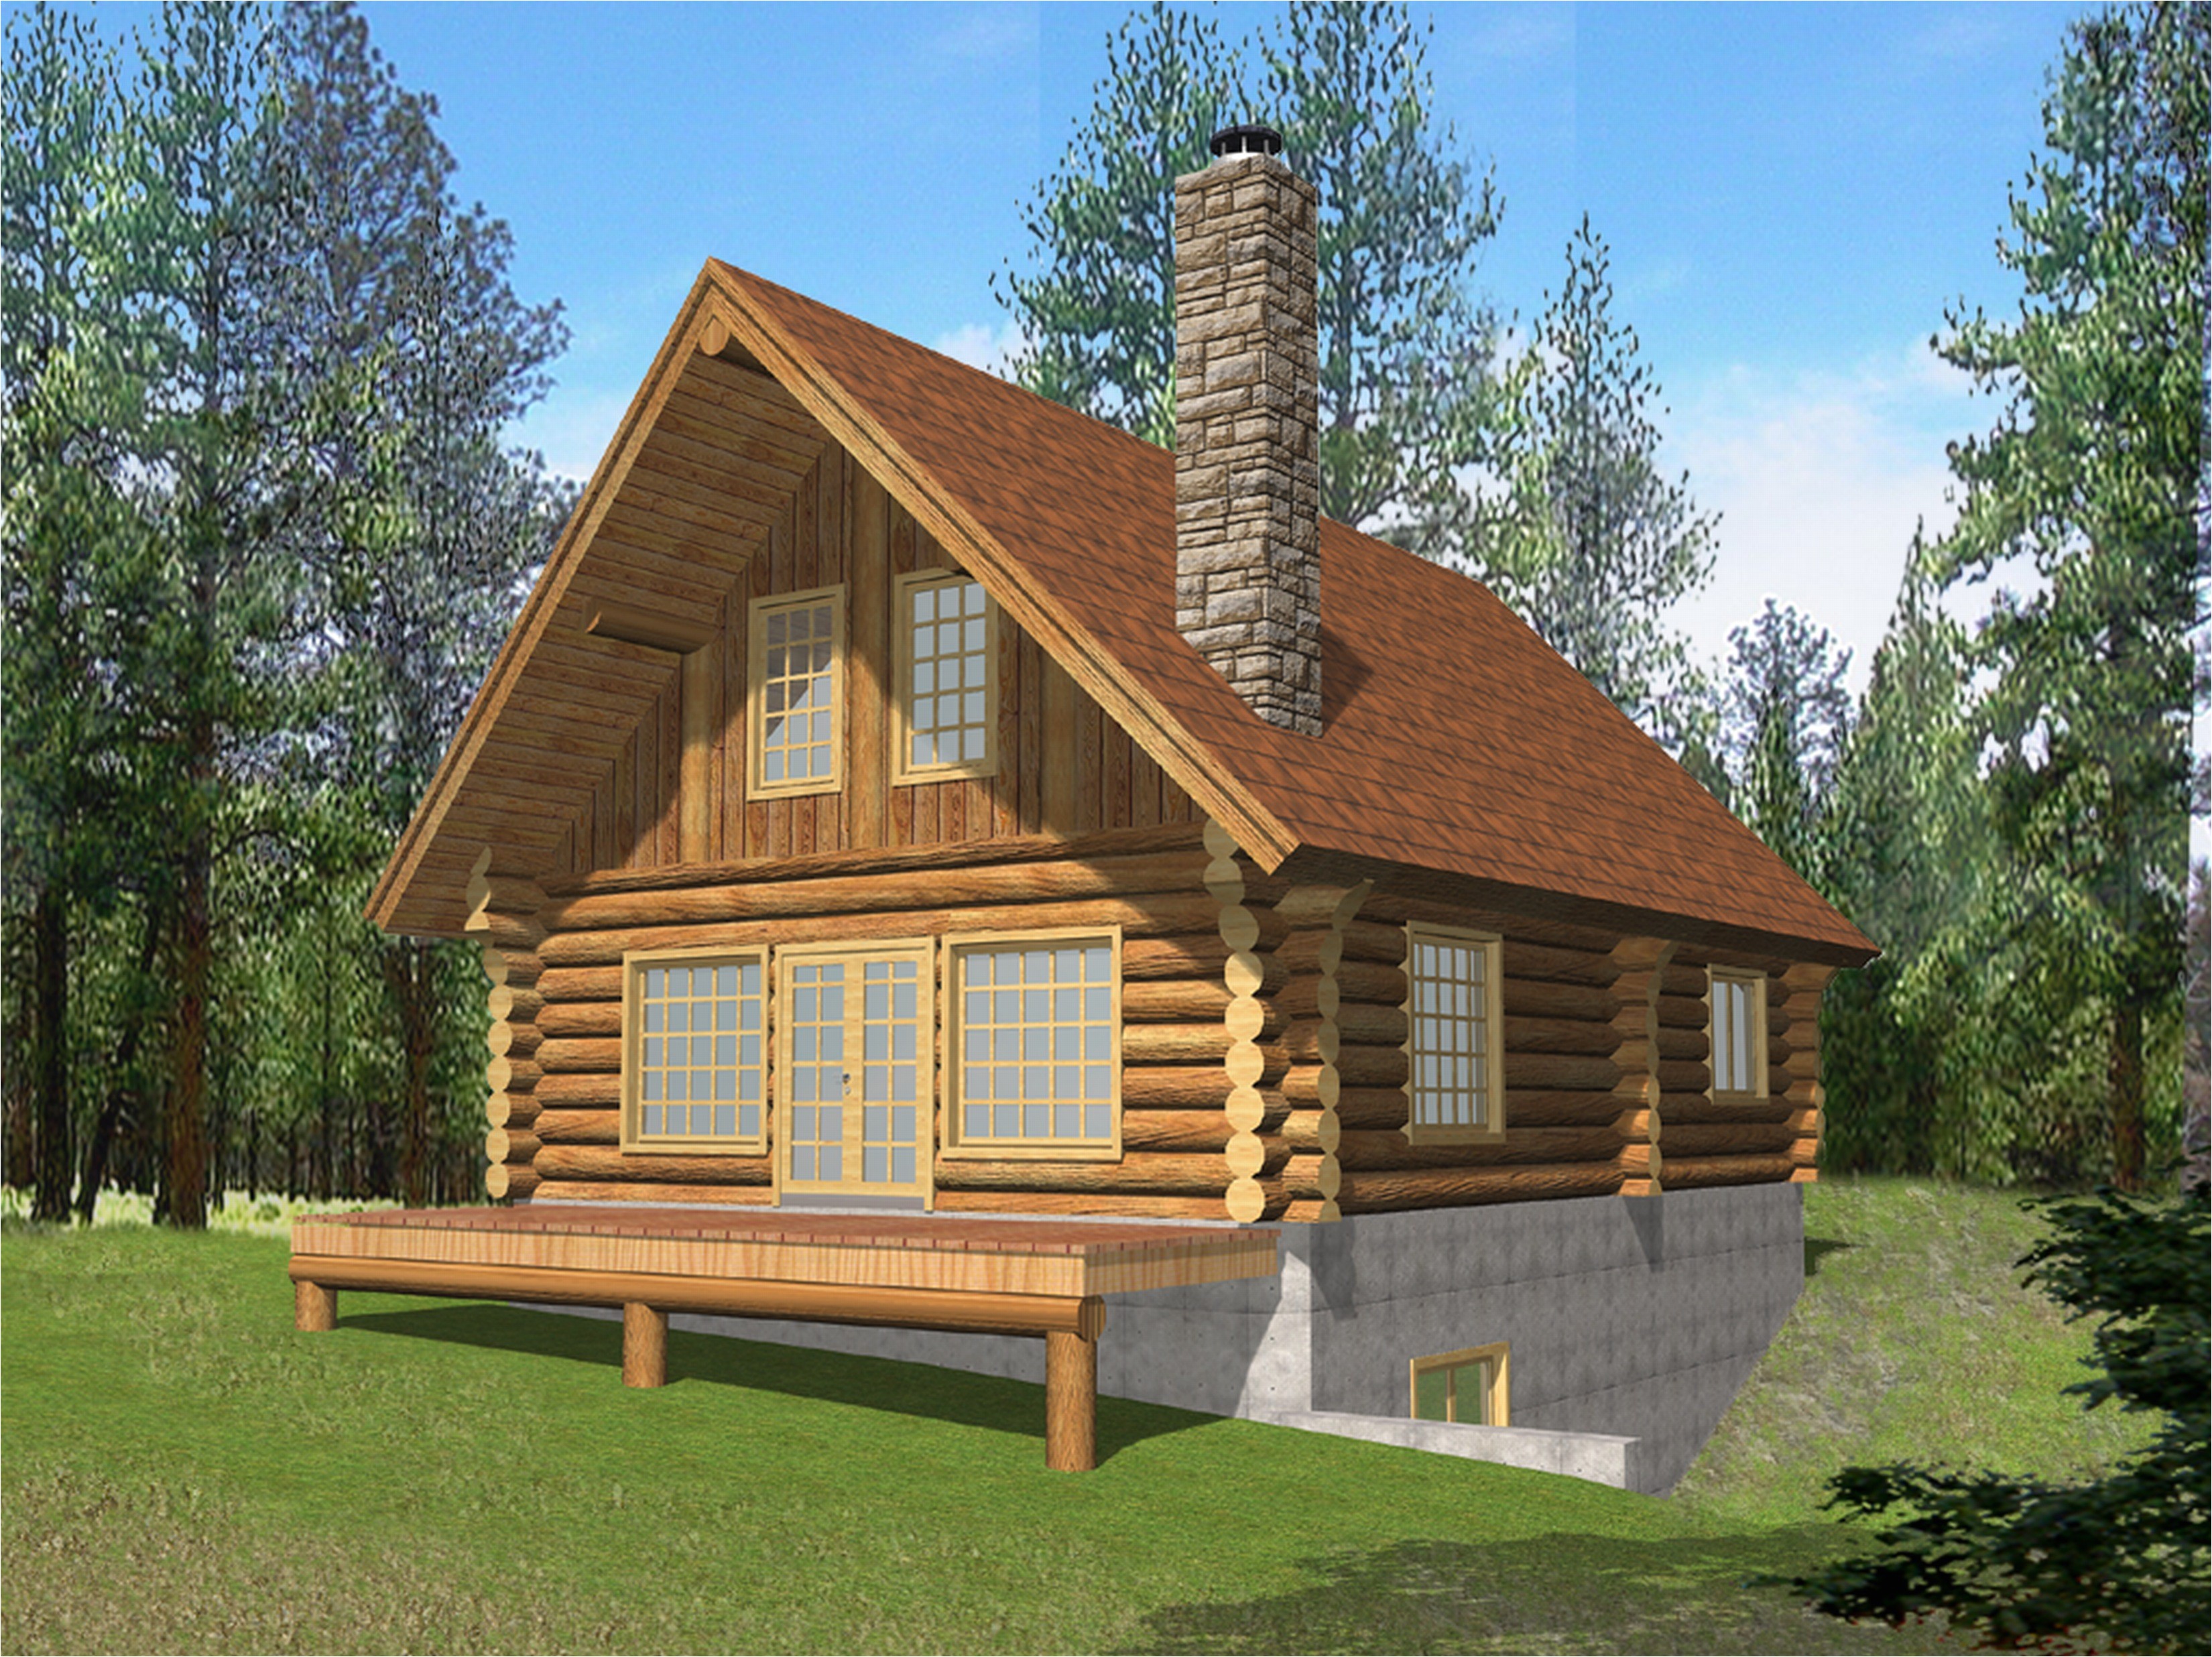 Log Cabin House Plans with Photos Log Home Plans with Loft Smalltowndjs Com